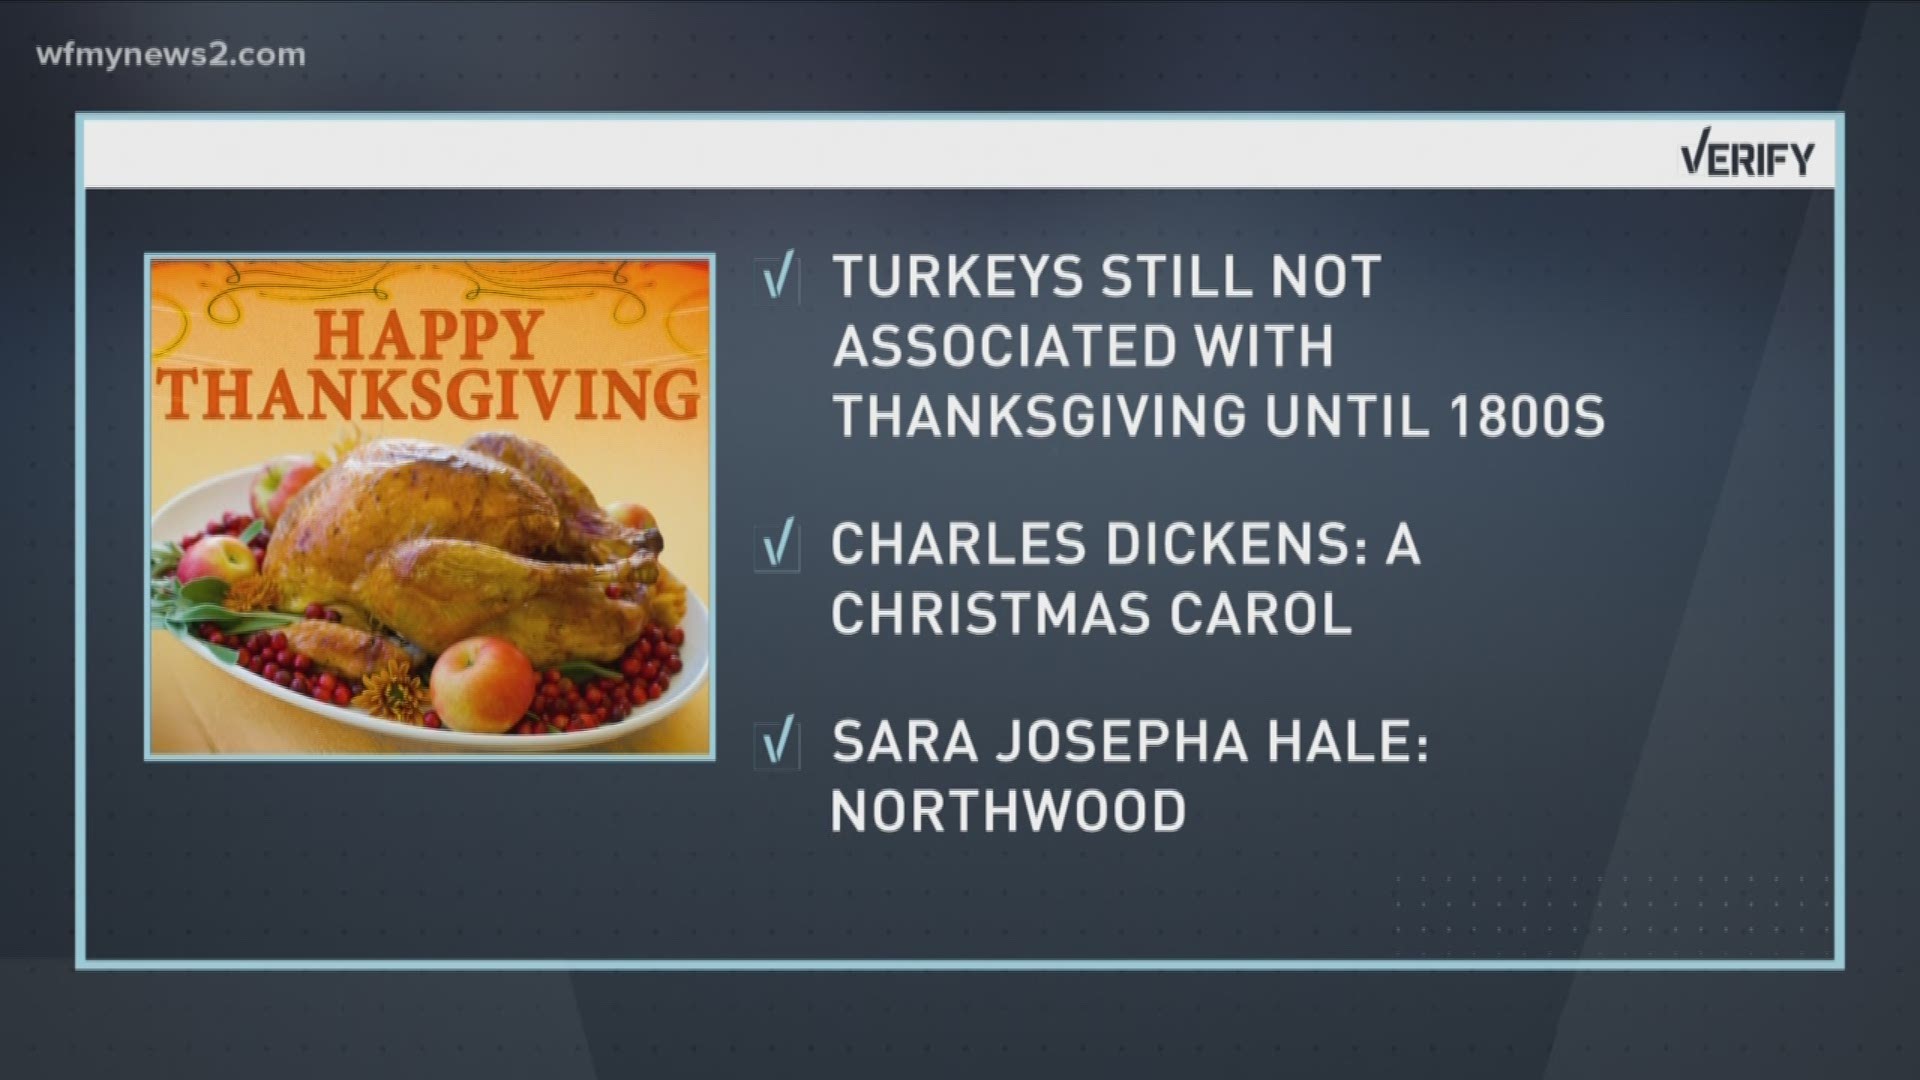 VERIFY: Turkey for Thanksgiving?